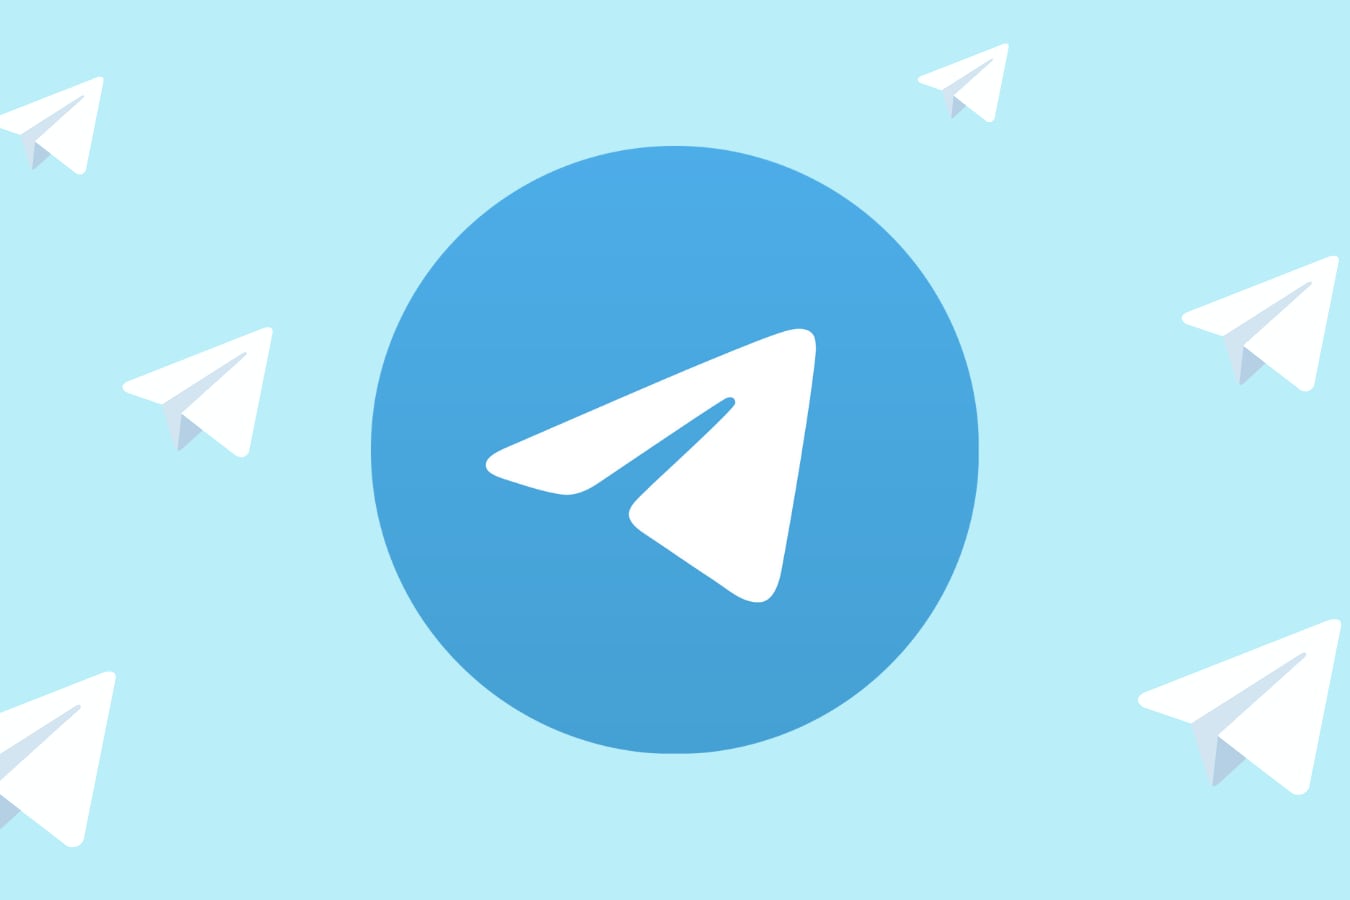 Telegram обогнал WhatsApp и занял 3 место по ежедневной аудитории в России